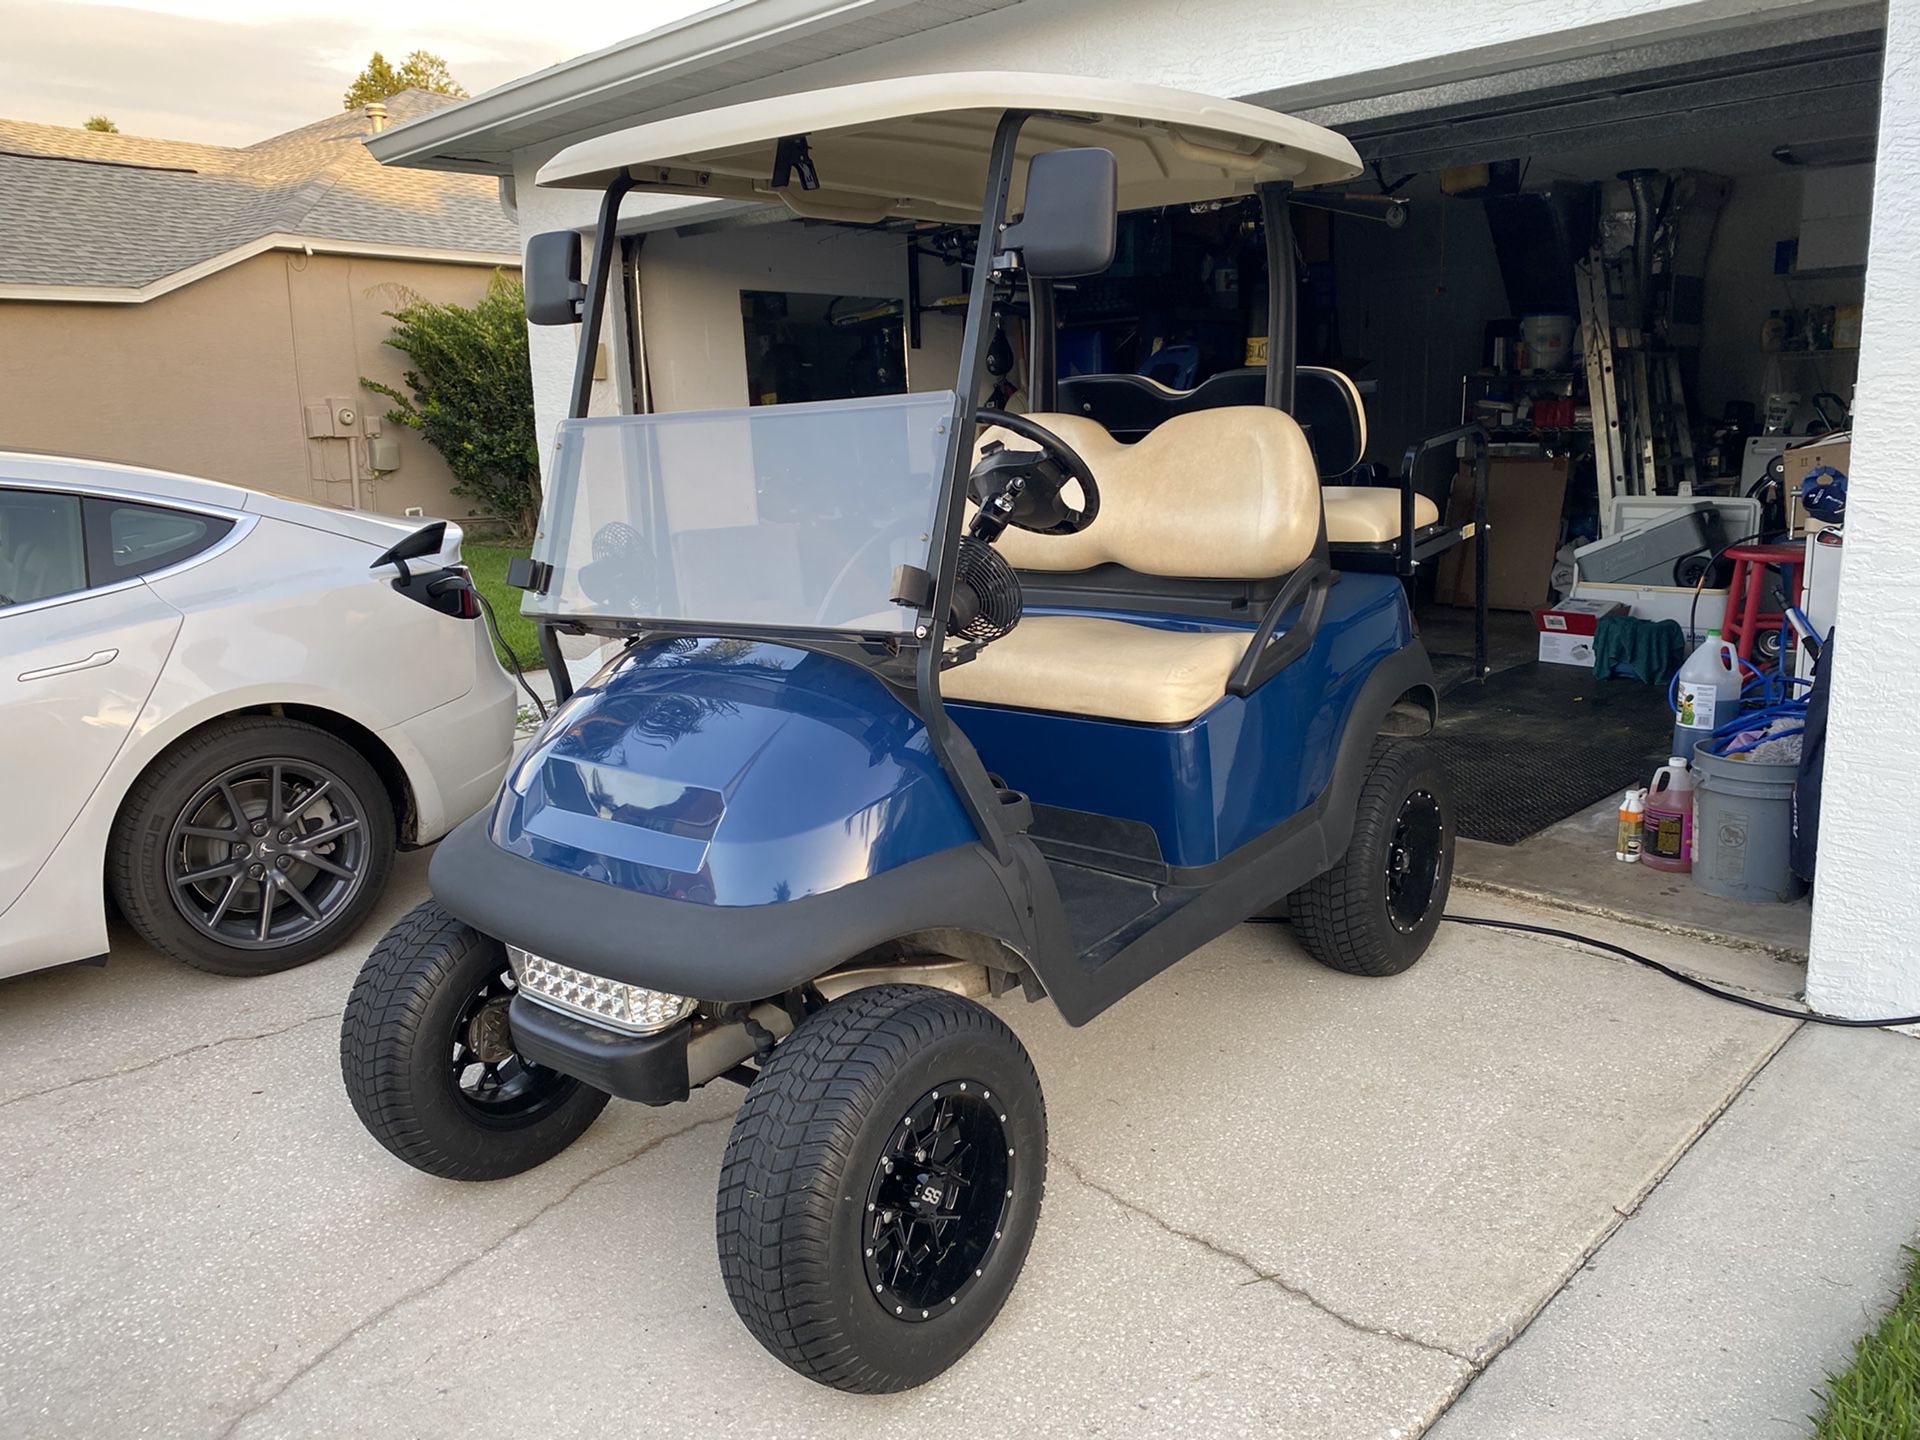 Club car precedent golf cart